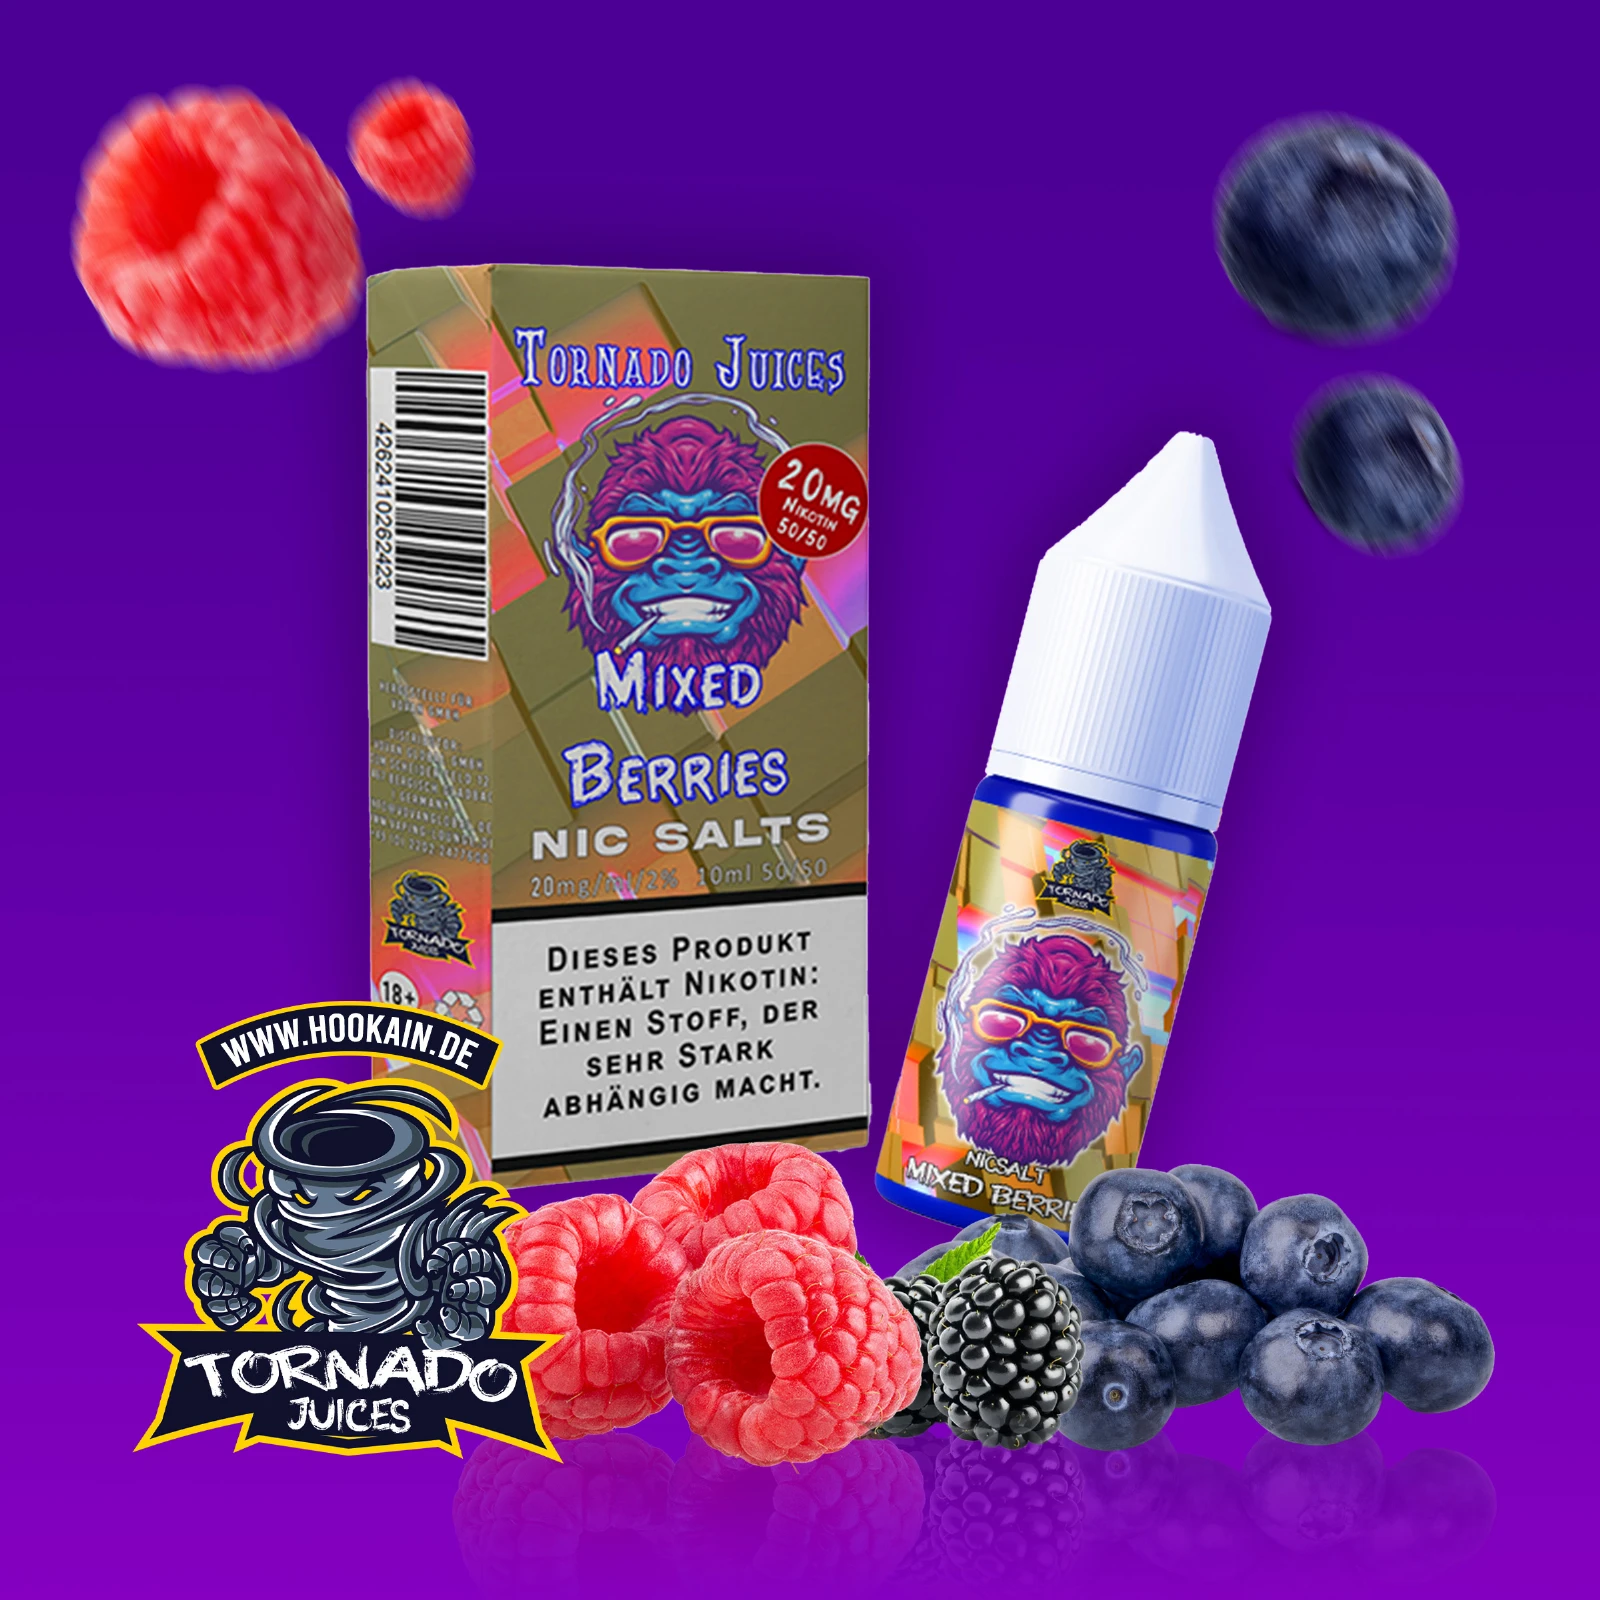 Tornado Juices Mixed Berries with Nicotine Salt Vape E-Liquids